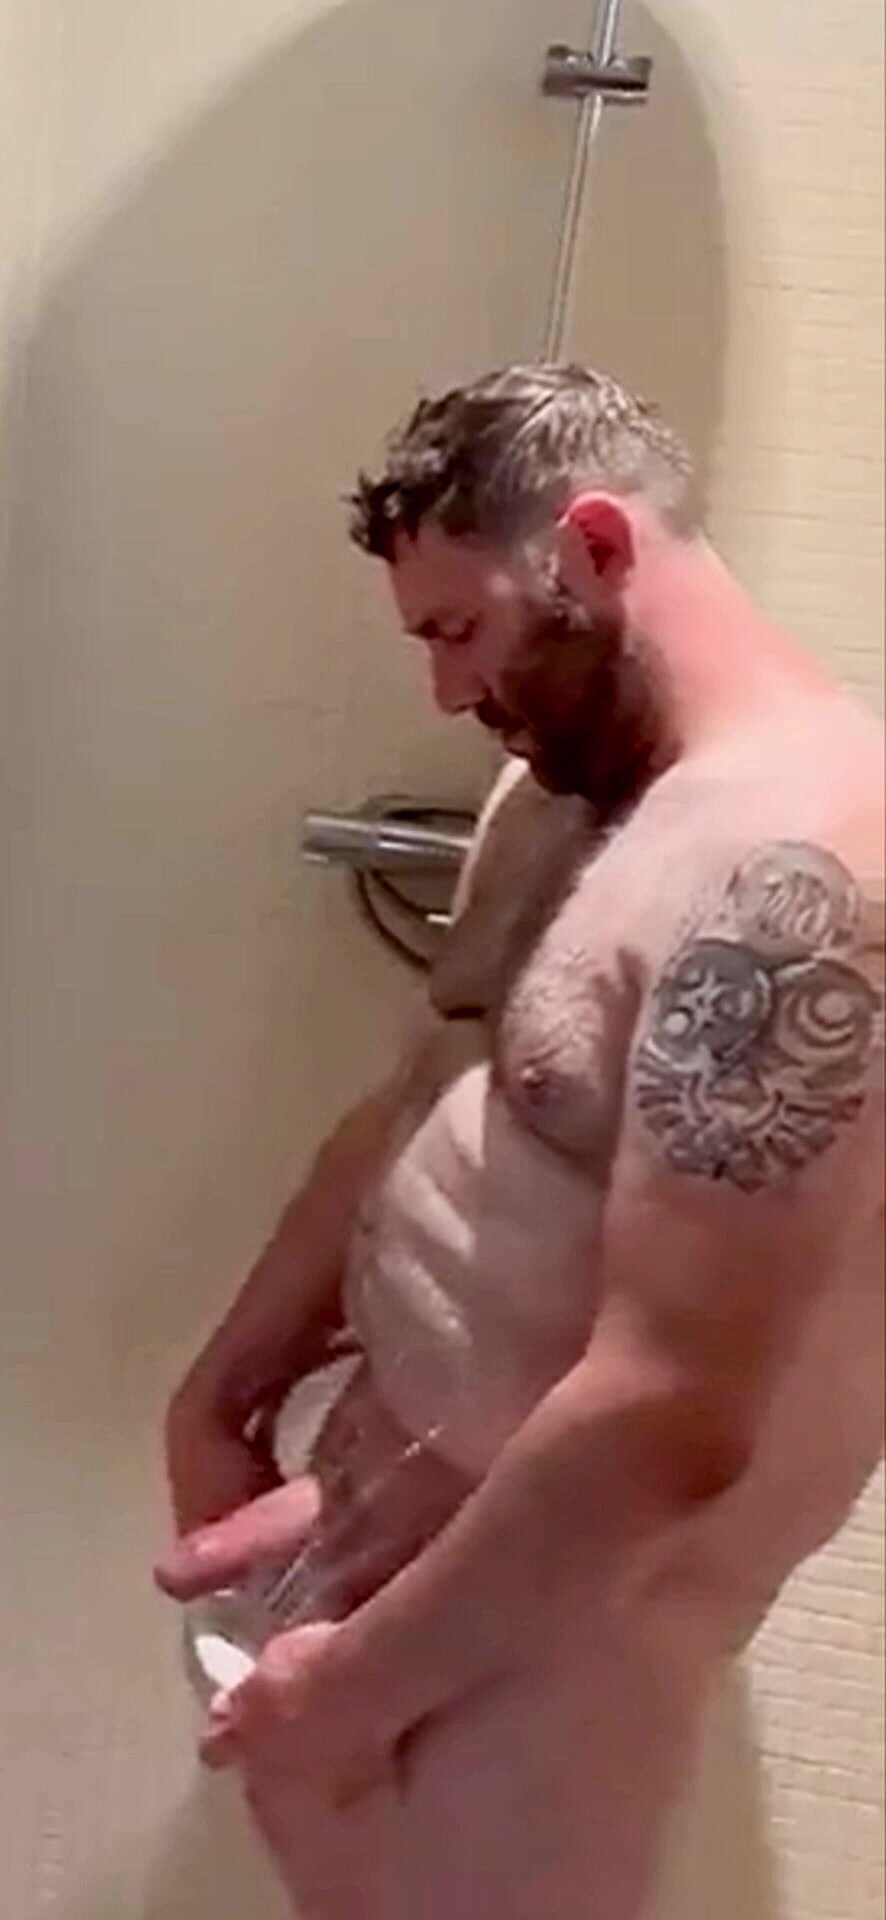 Bear cums in shower